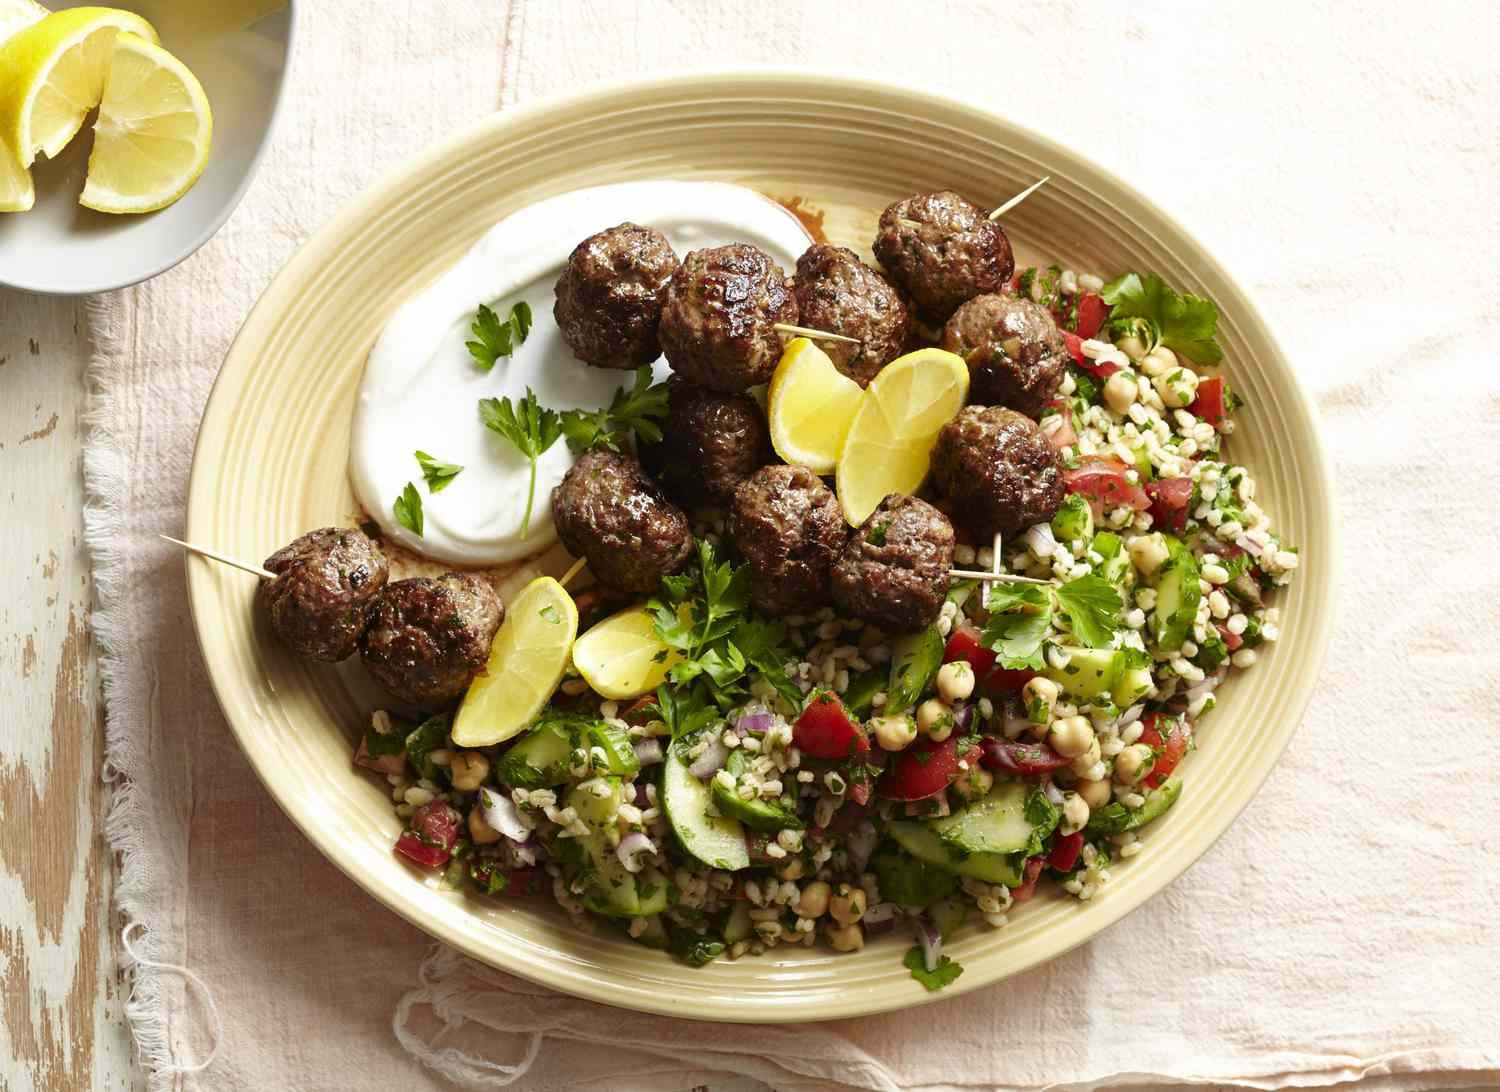 10 Essential Tools for Preparing Middle Eastern Cuisine